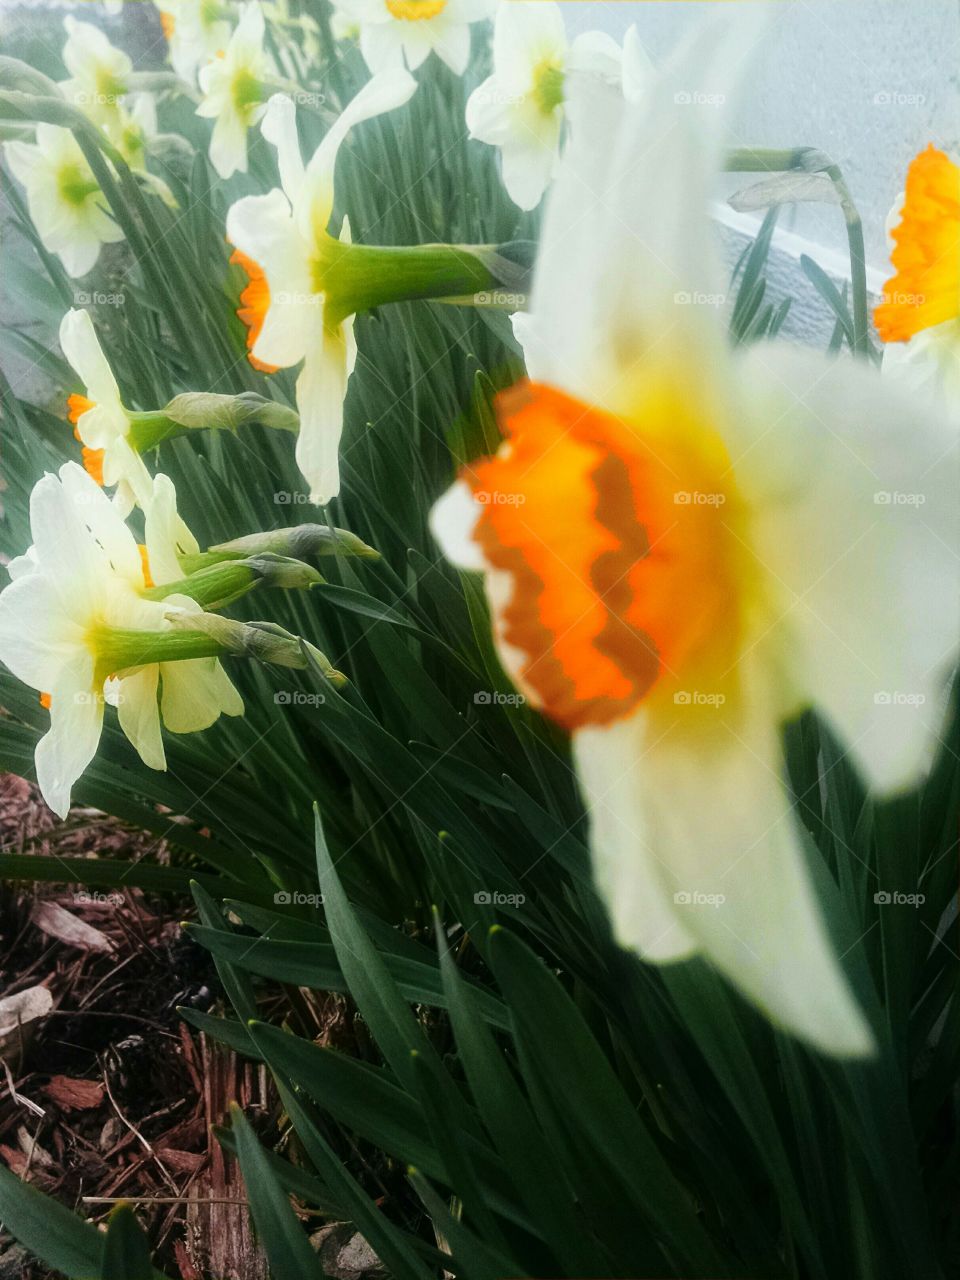 daffodil's for spring garden